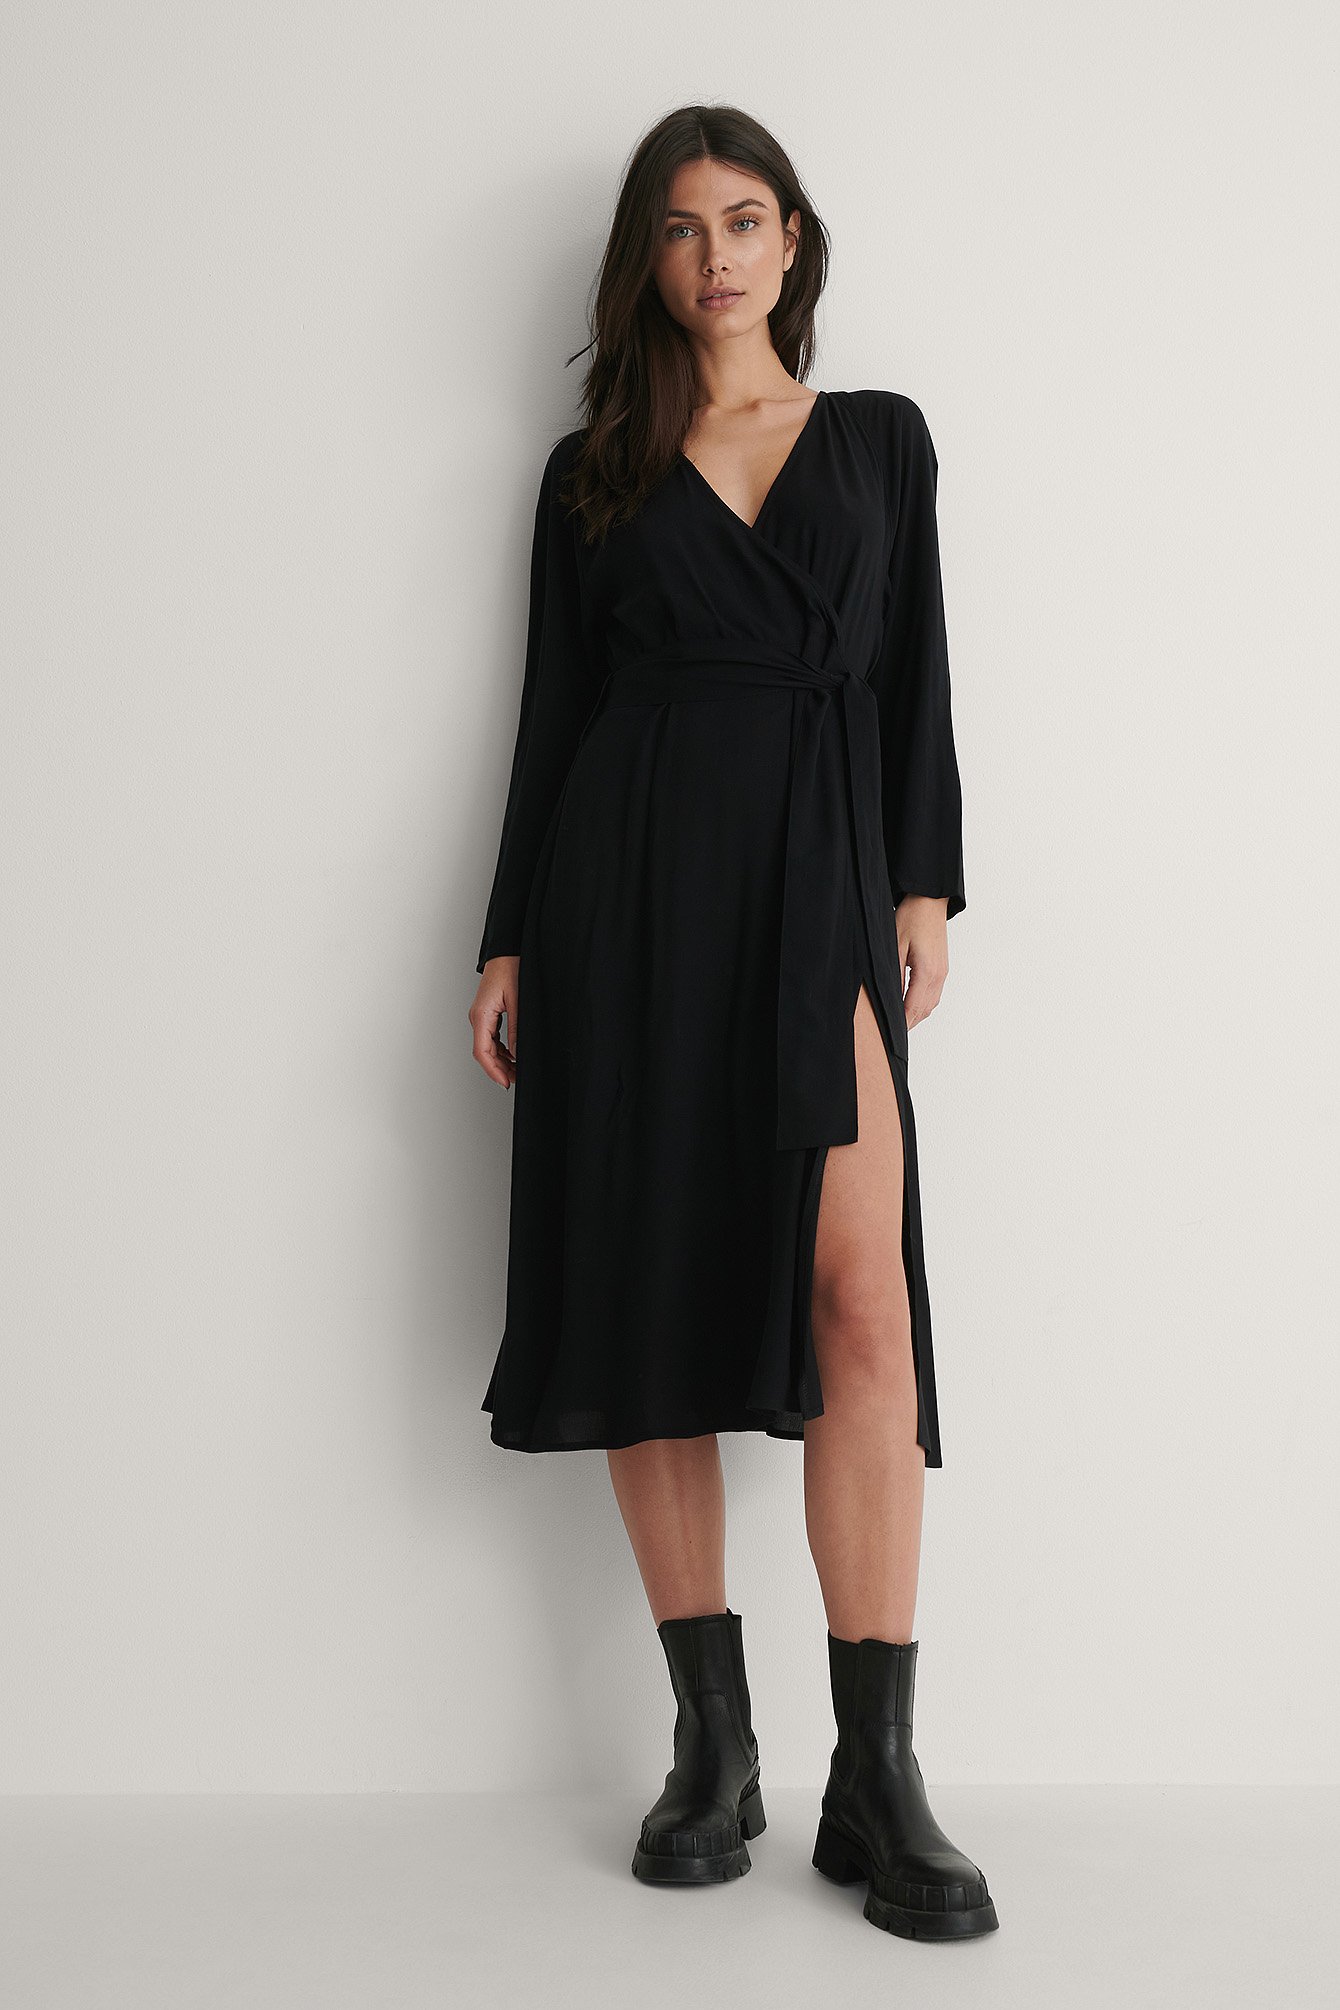 Black Long Sleeve Kimono Dress